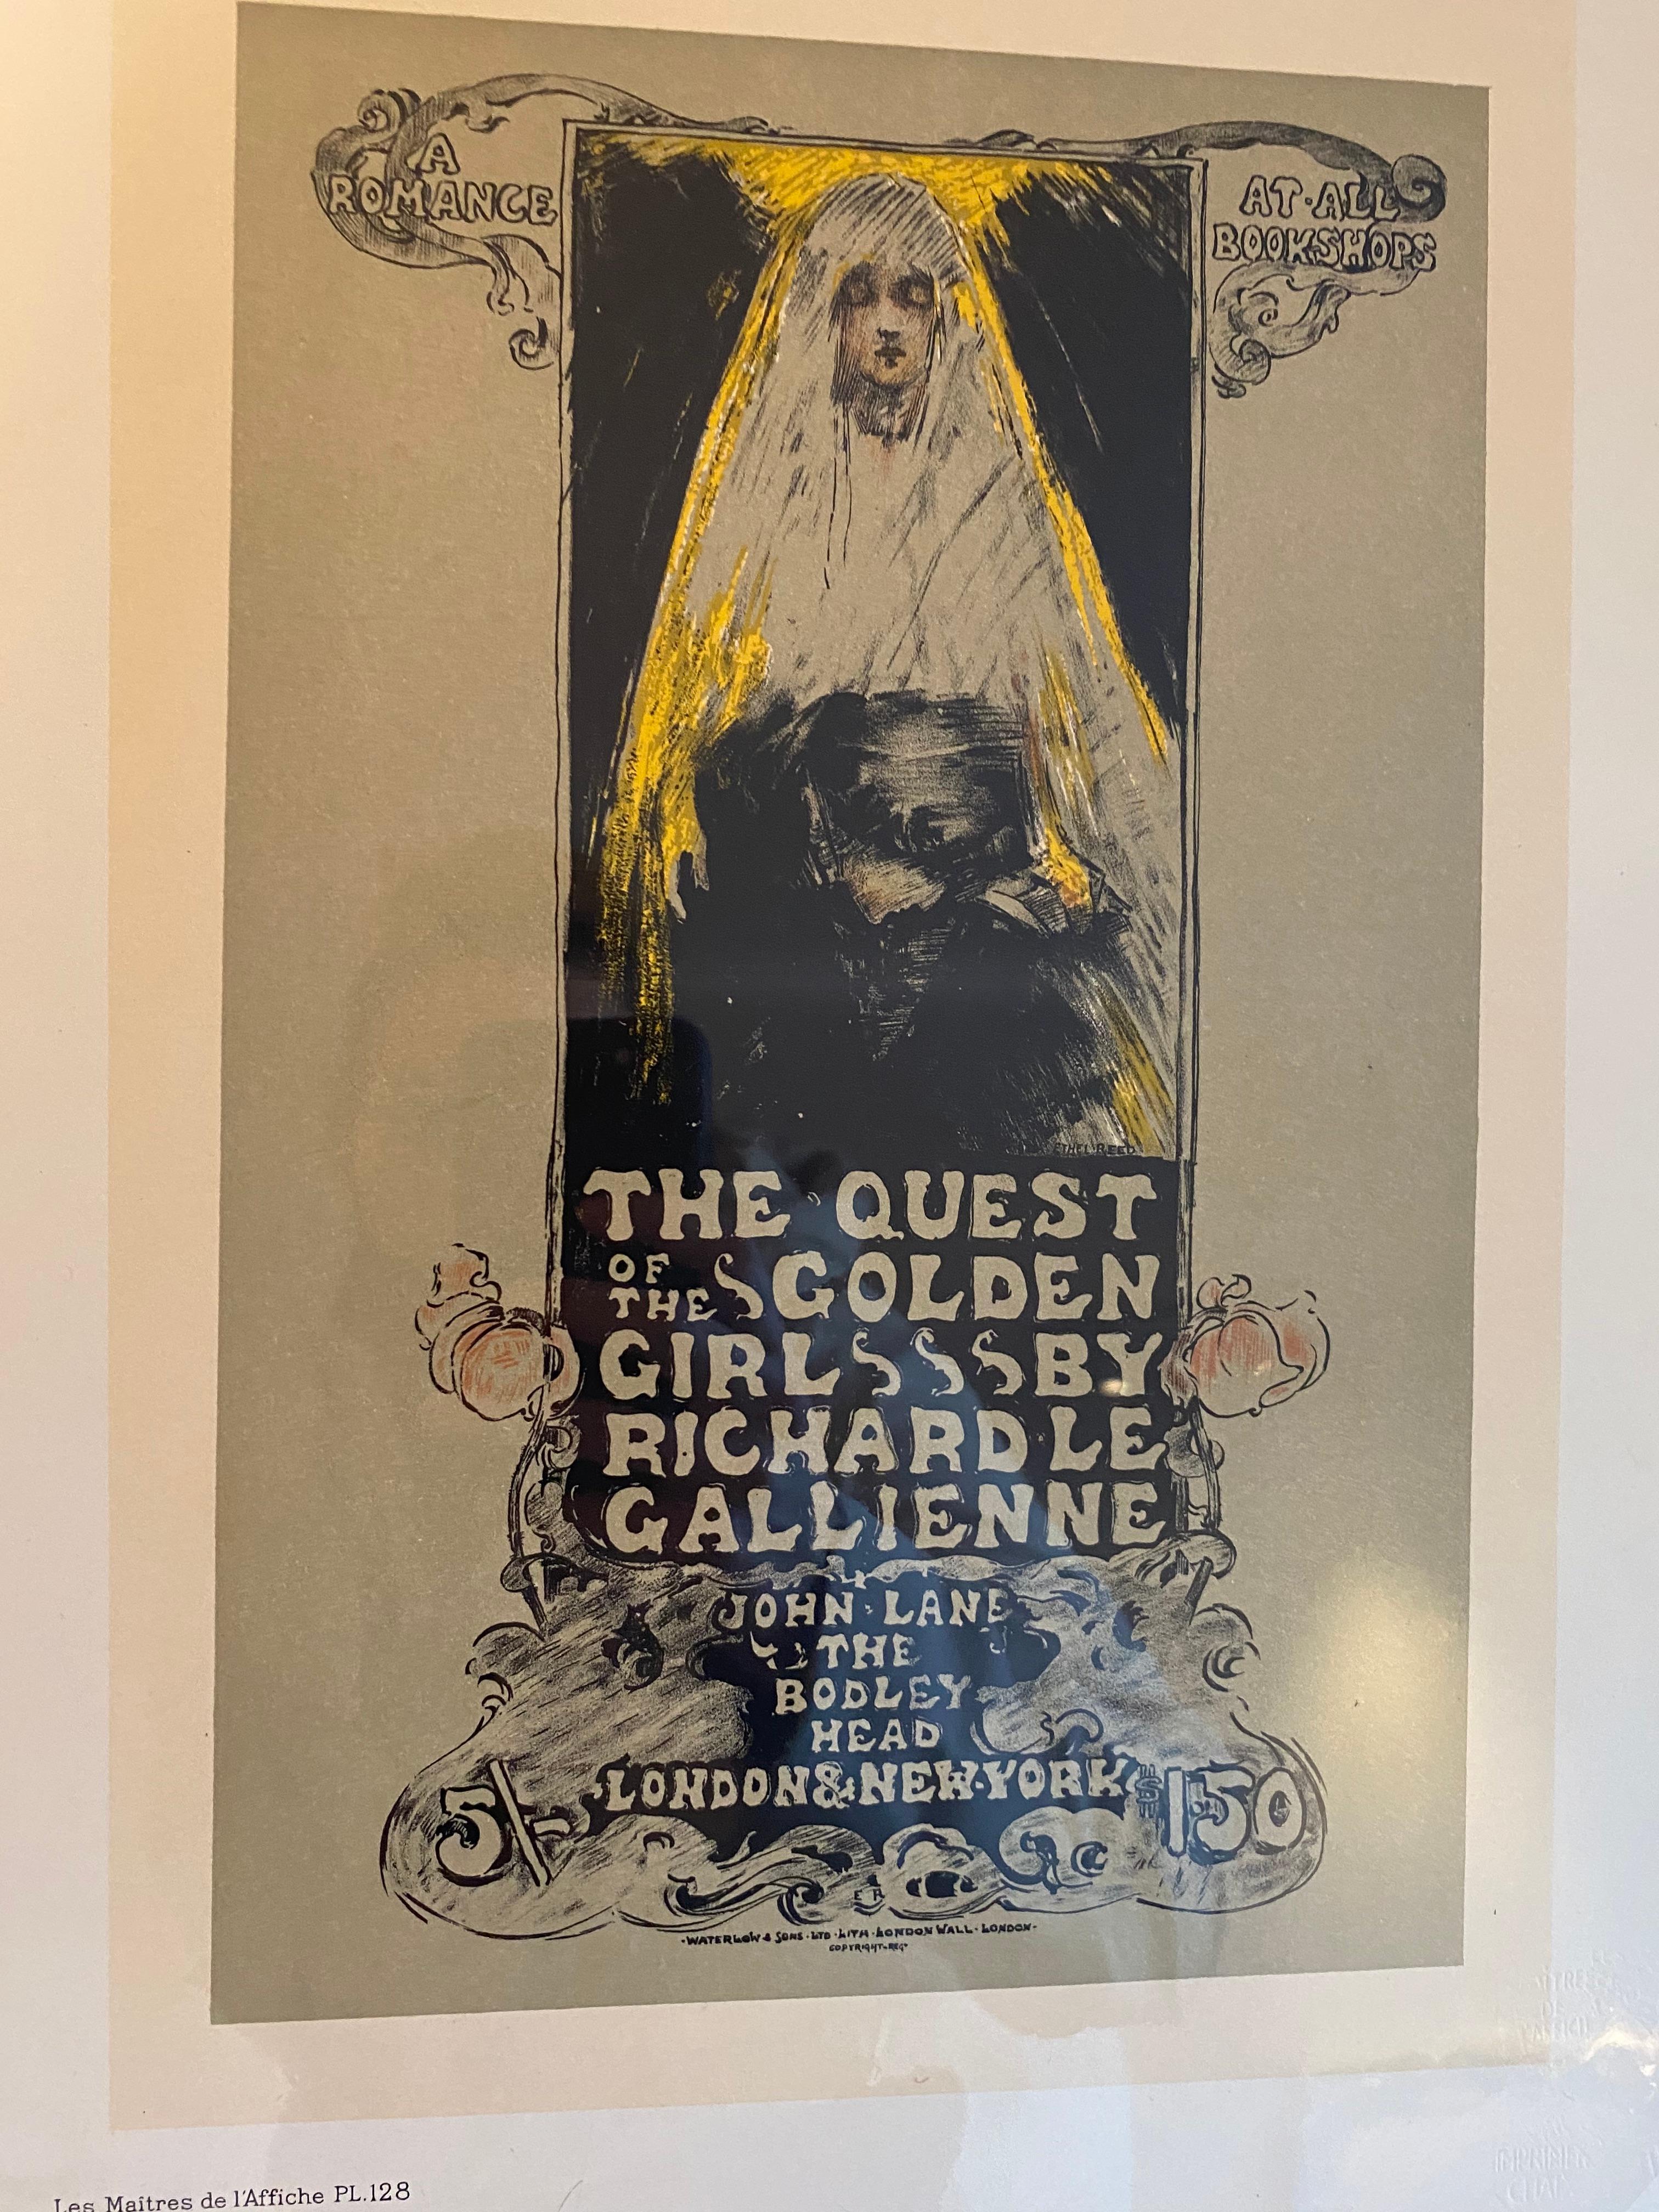 Ethel Reed Figurative Print - "Quest of the Golden Girl" from Les Maitres de l'Affiche